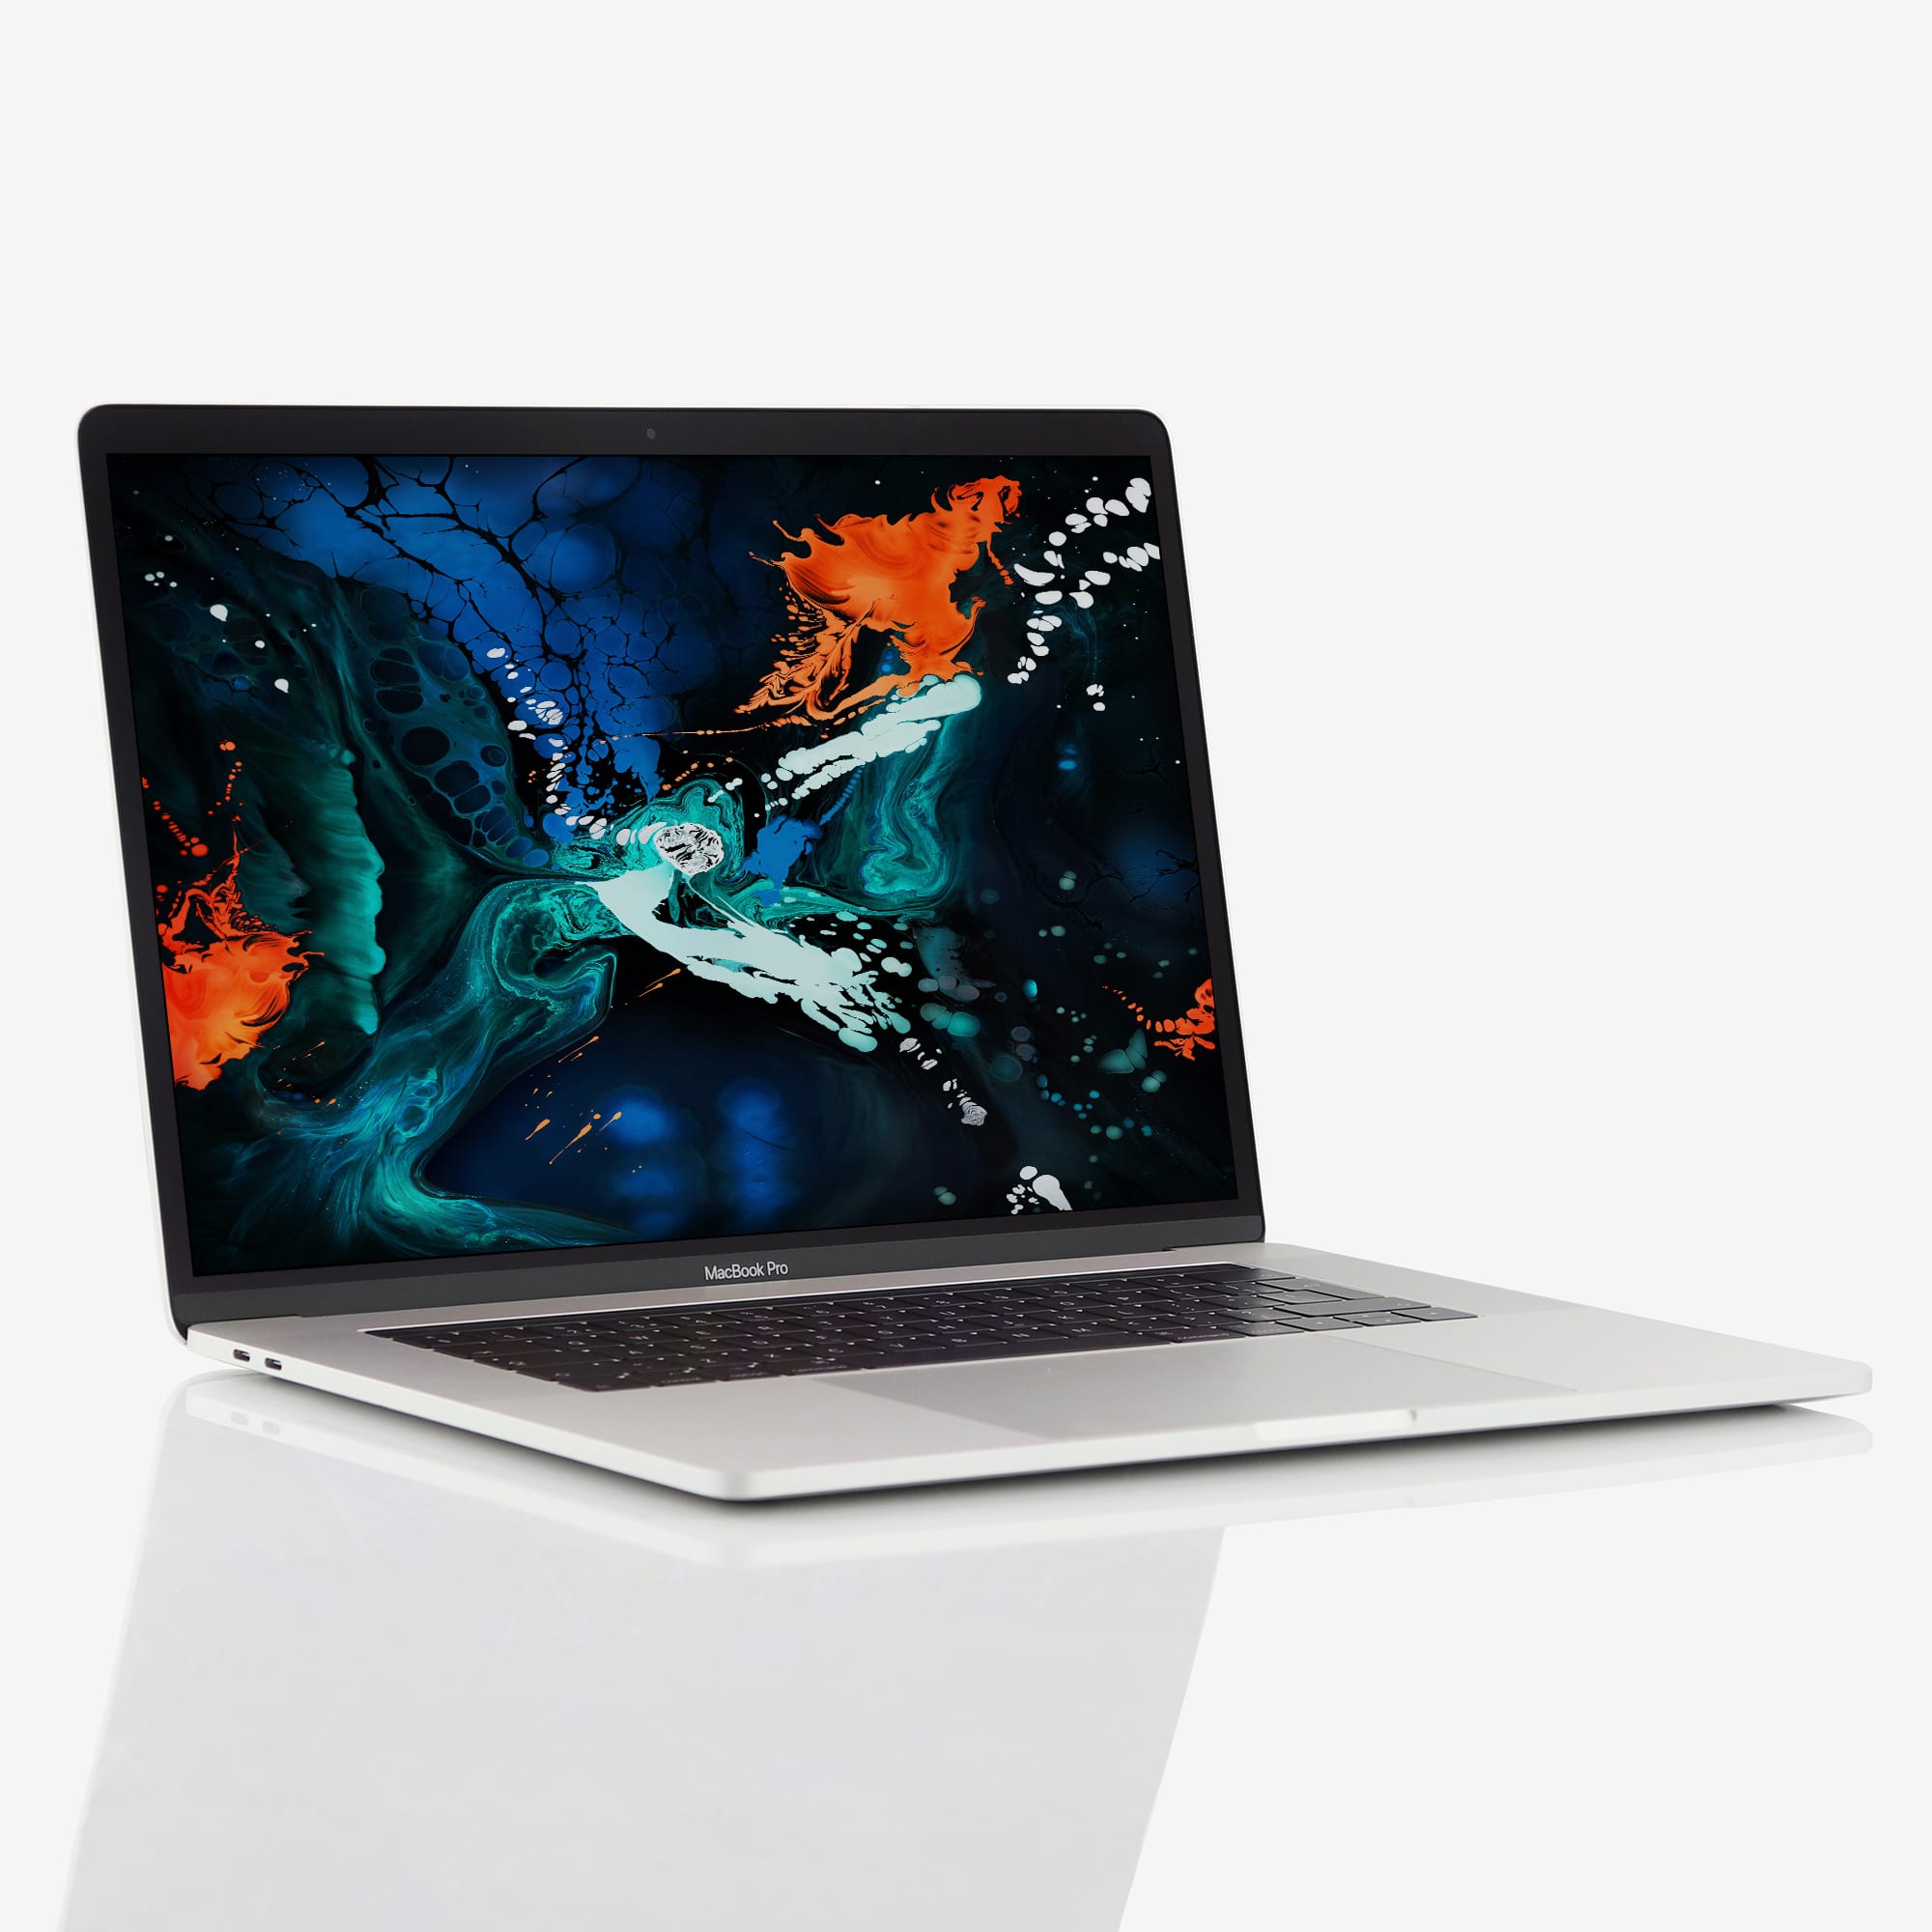 1 x Apple MacBook Pro Retina 15 Inch Touchbar Intel Core i7 2.80 GHz (2017)